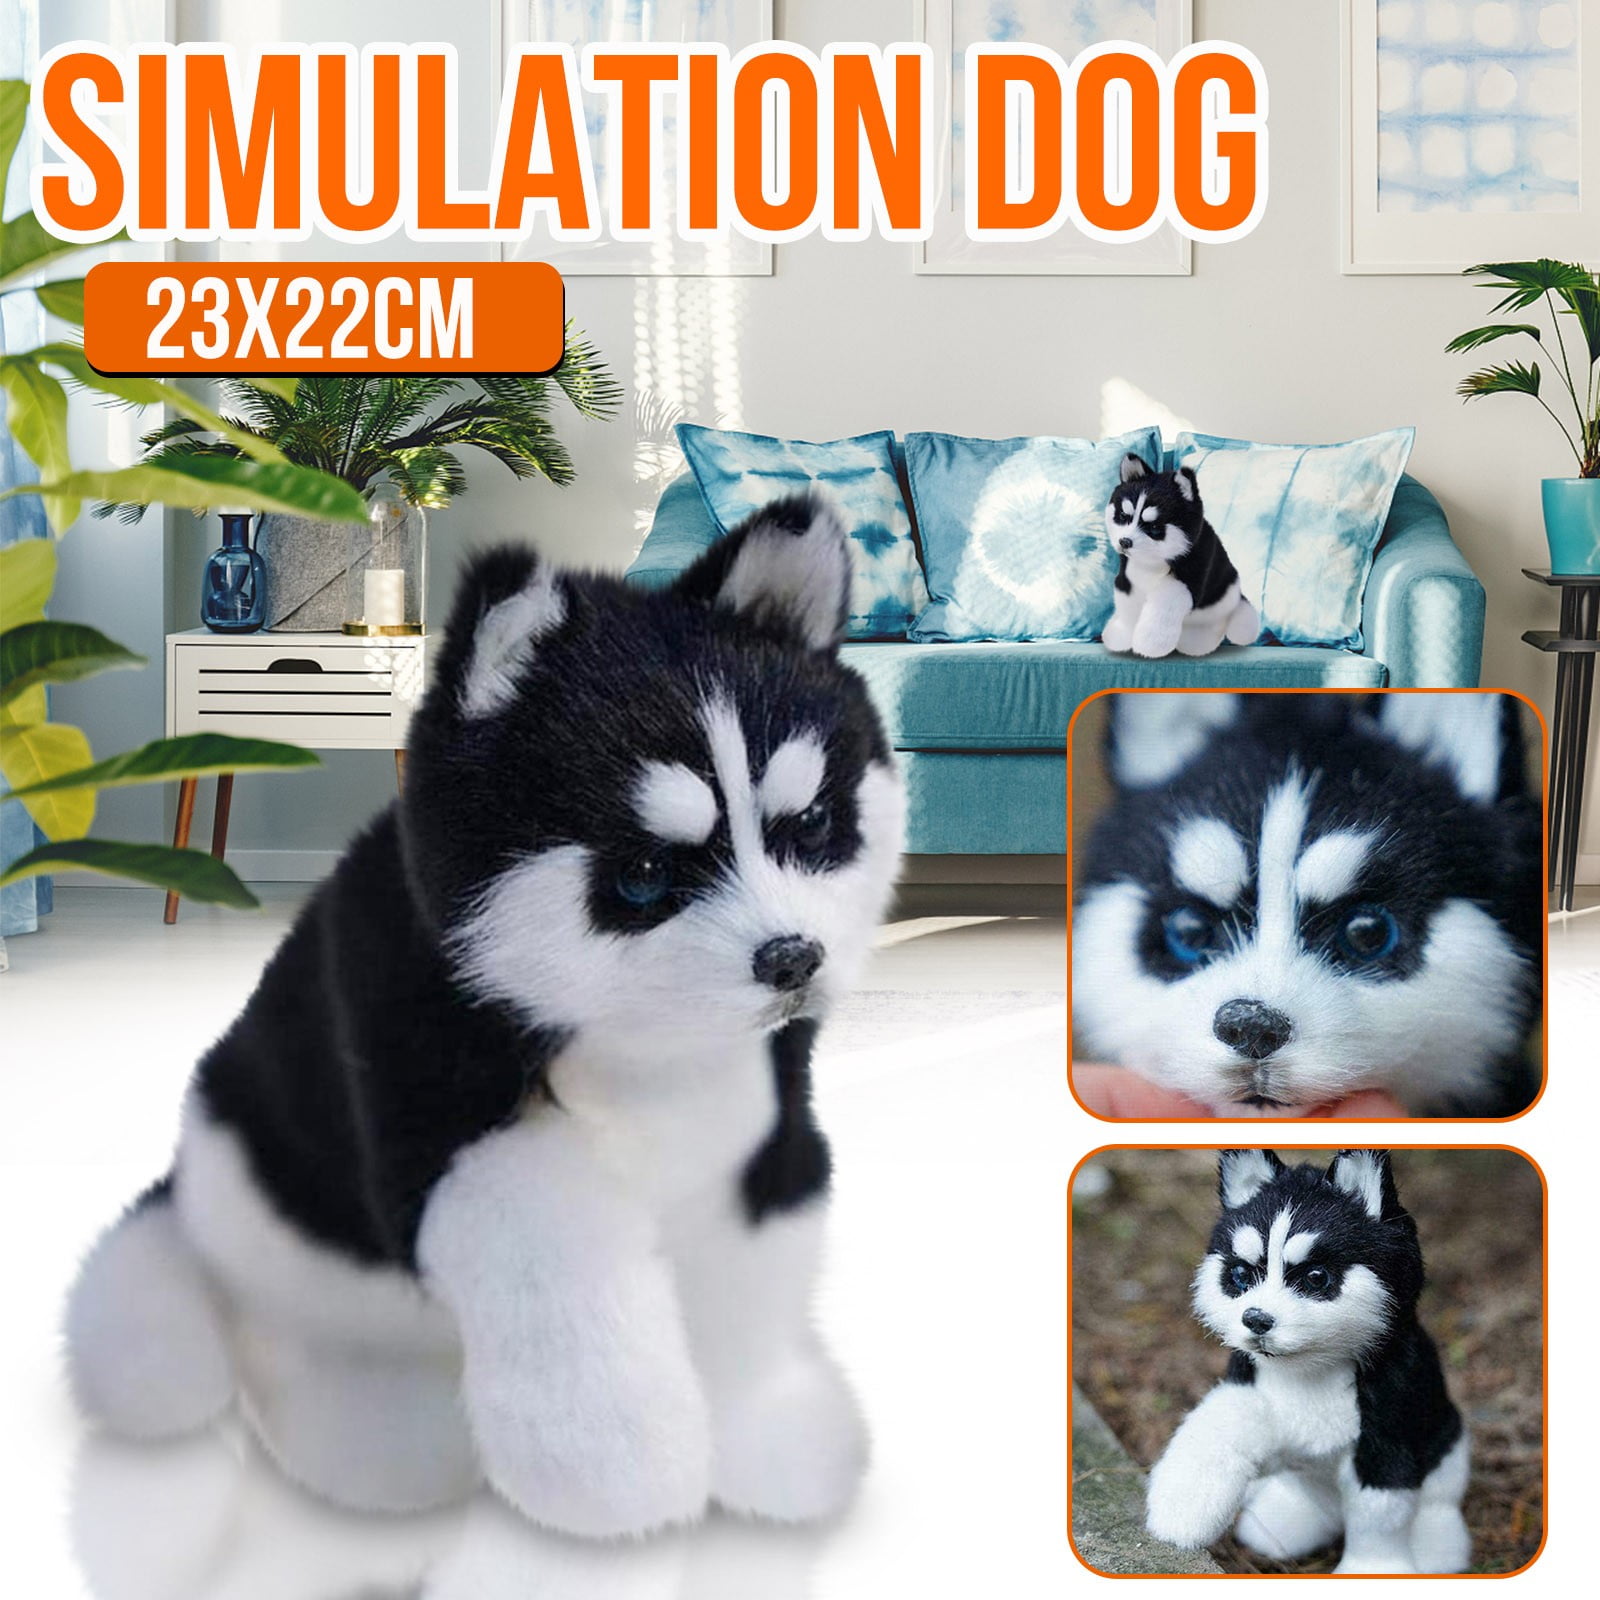 Realistic Husky Dog Simulation Toy Dog Puppy Lifelike Stuffed Companion Toy x 1 